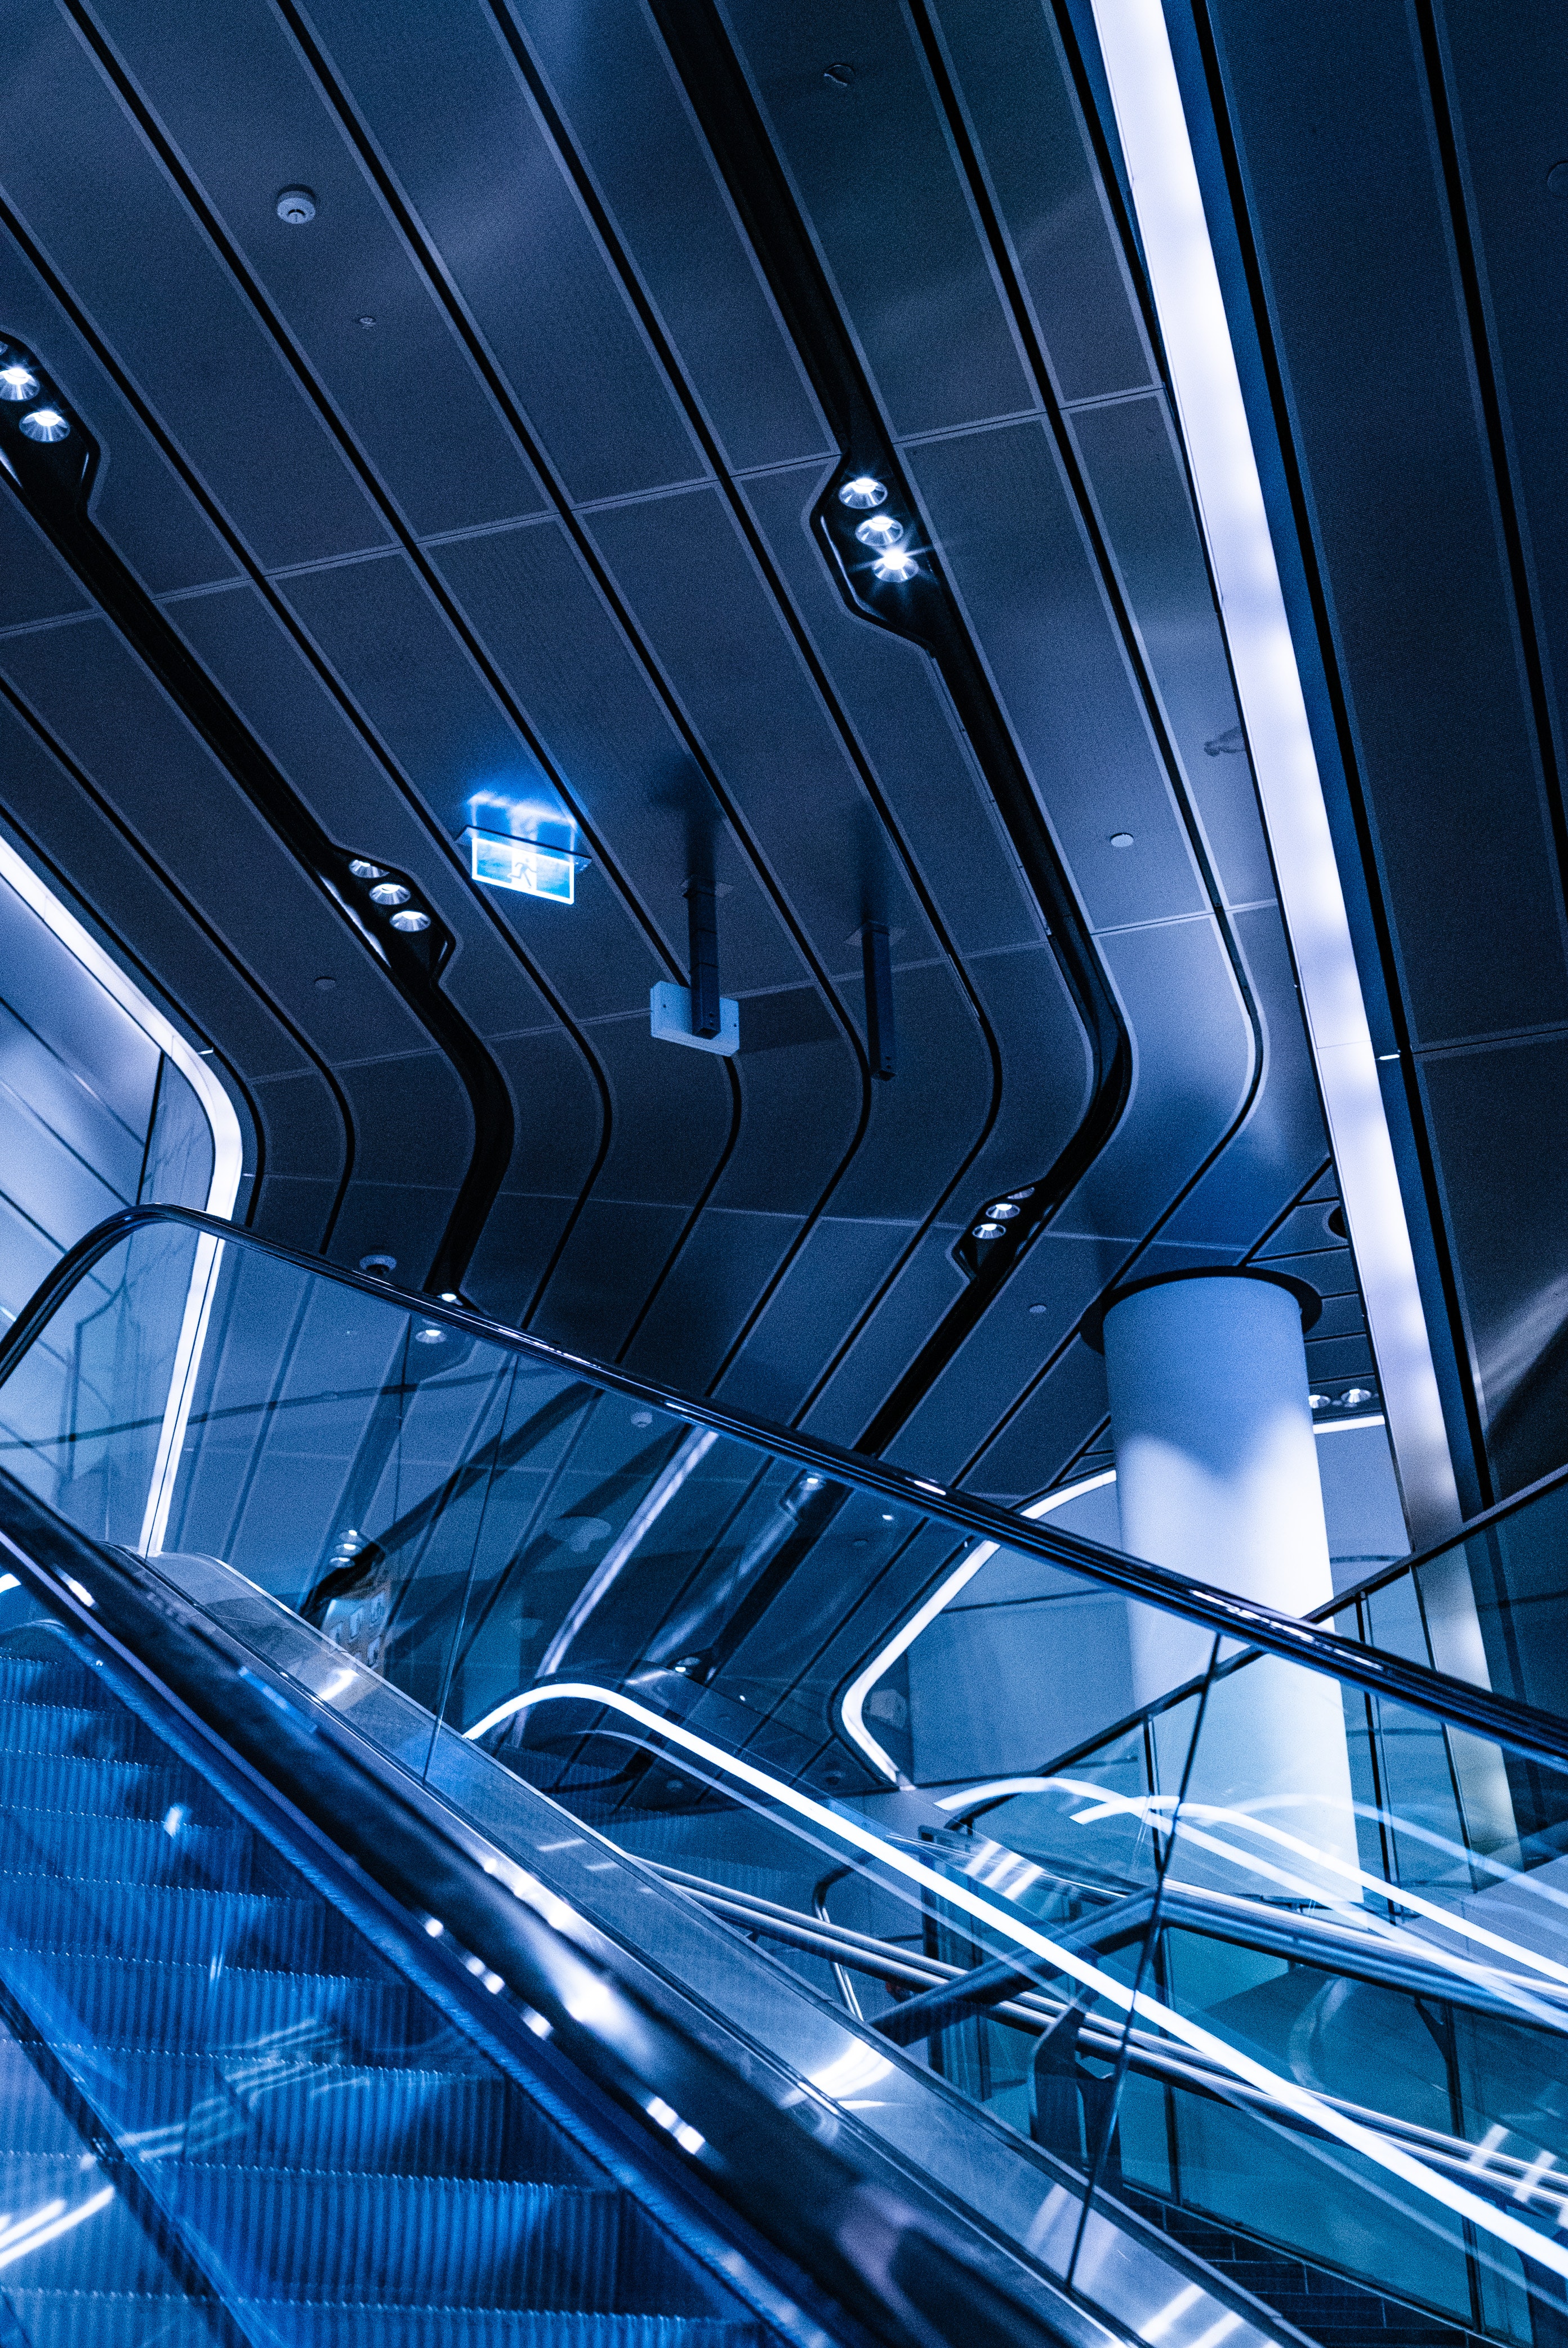 An escalator illuminated with blue light